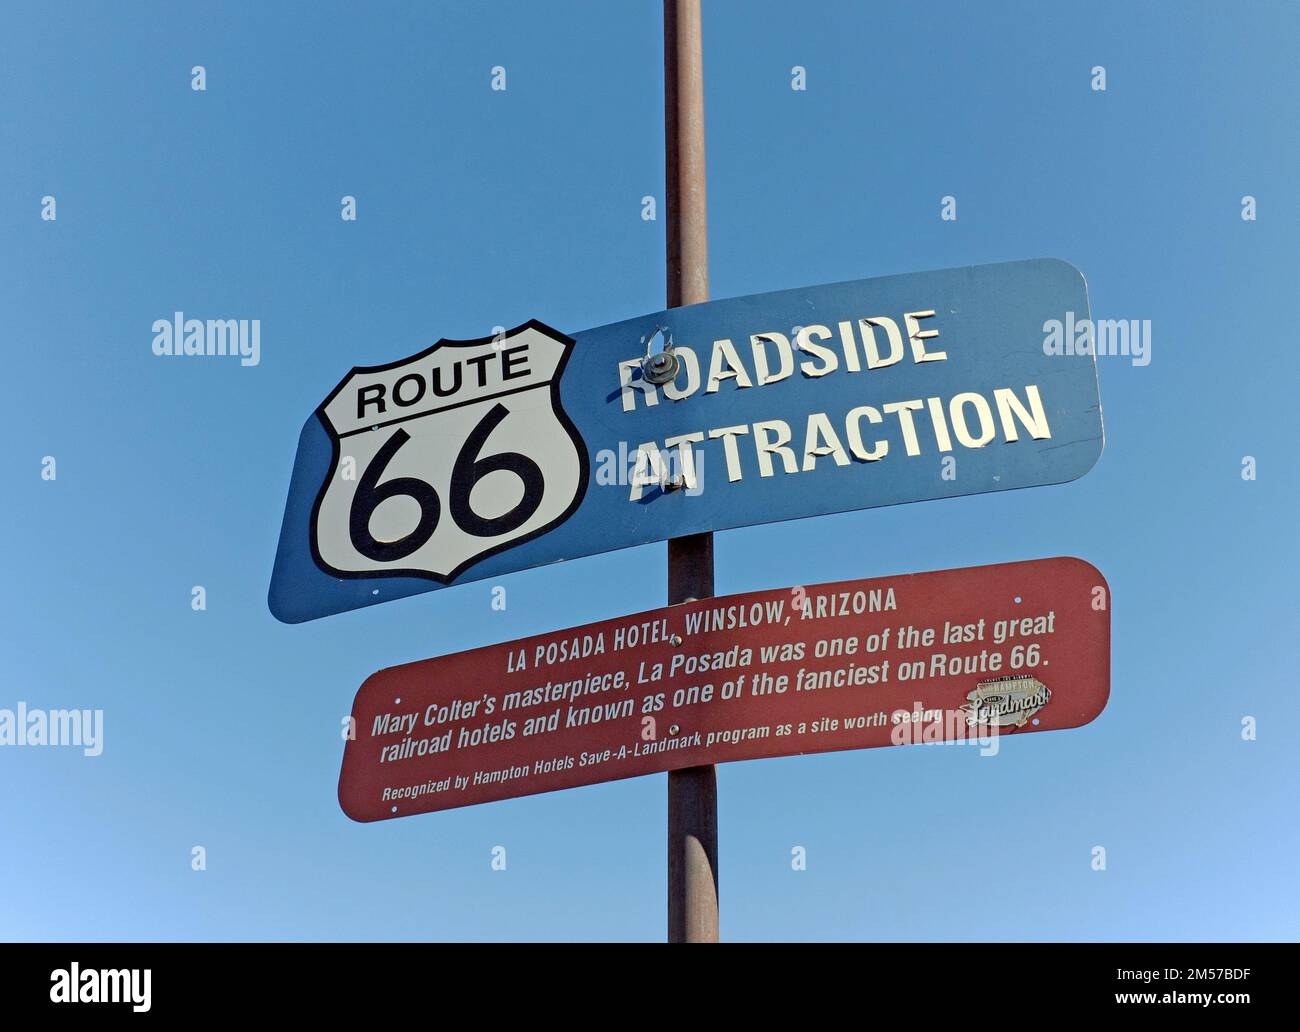 Route 66 roadside attraction sign in Winslow, Arizona honors La Posada Hotel and Mary Colter, the architect.  La Posada is a historic landmark. Stock Photo